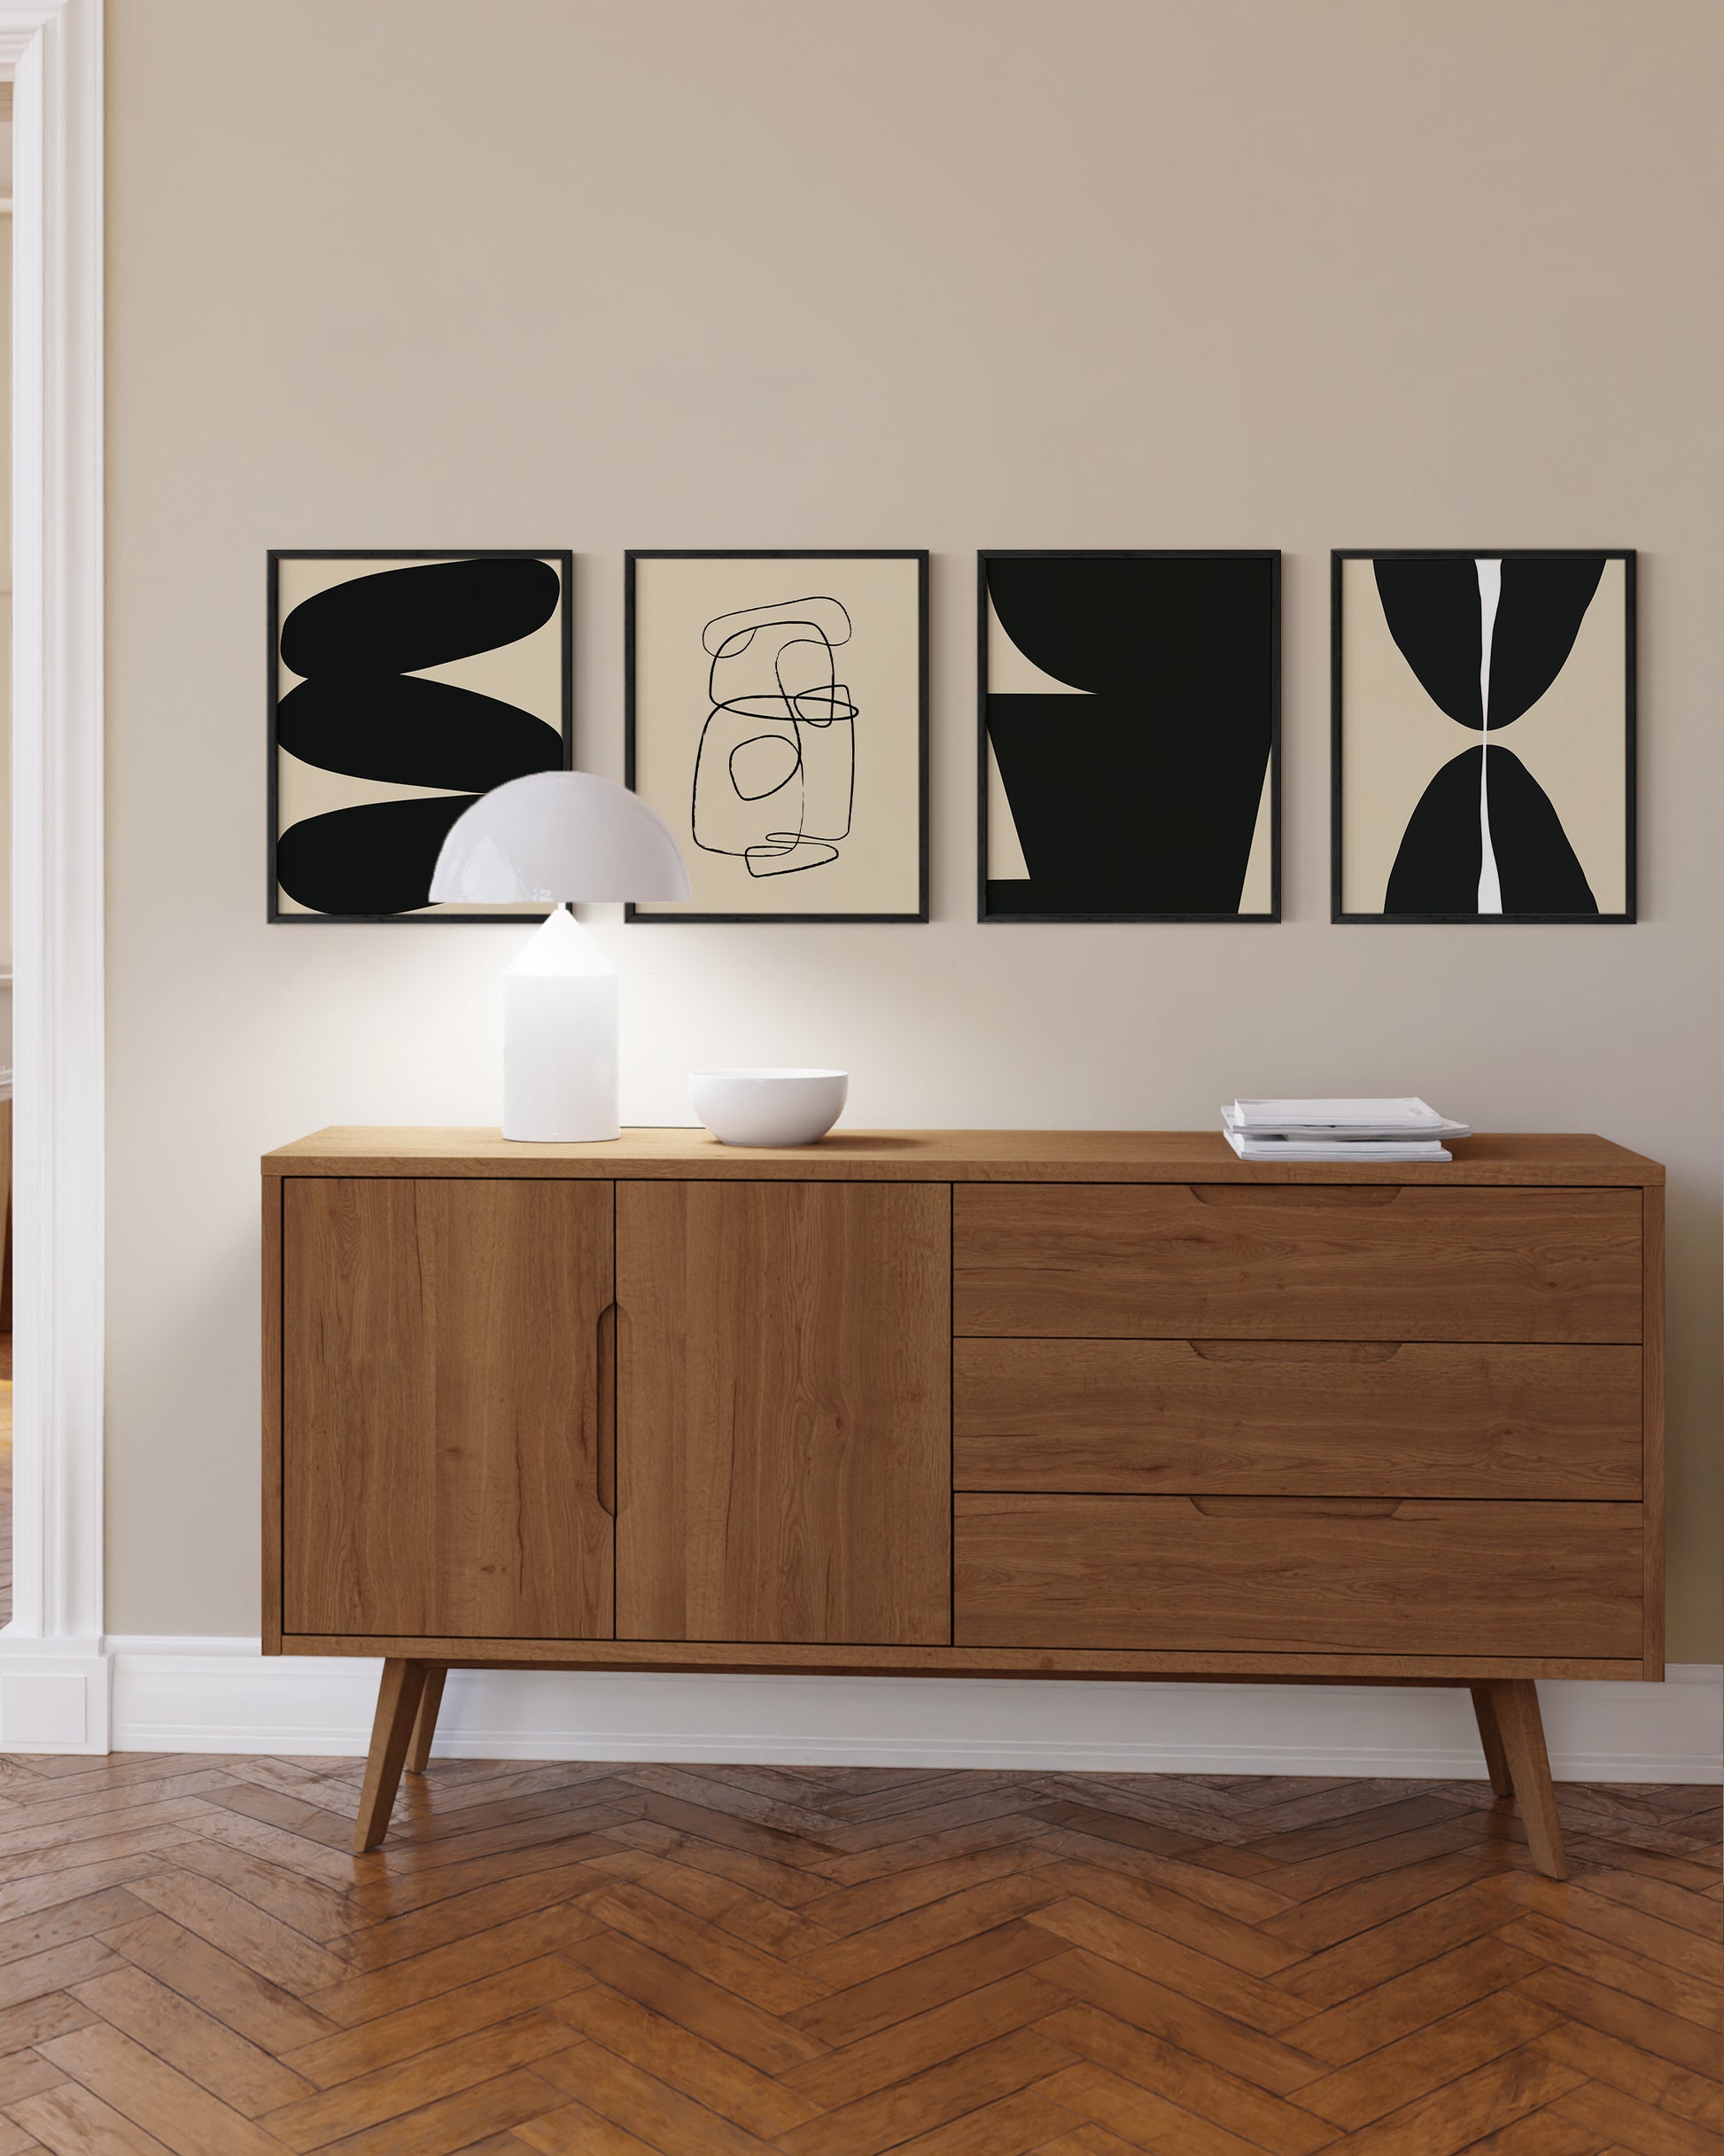 US Pride Furniture 11x14 inch Wood Picture Frame - Set of 4 (Set of 4) Black